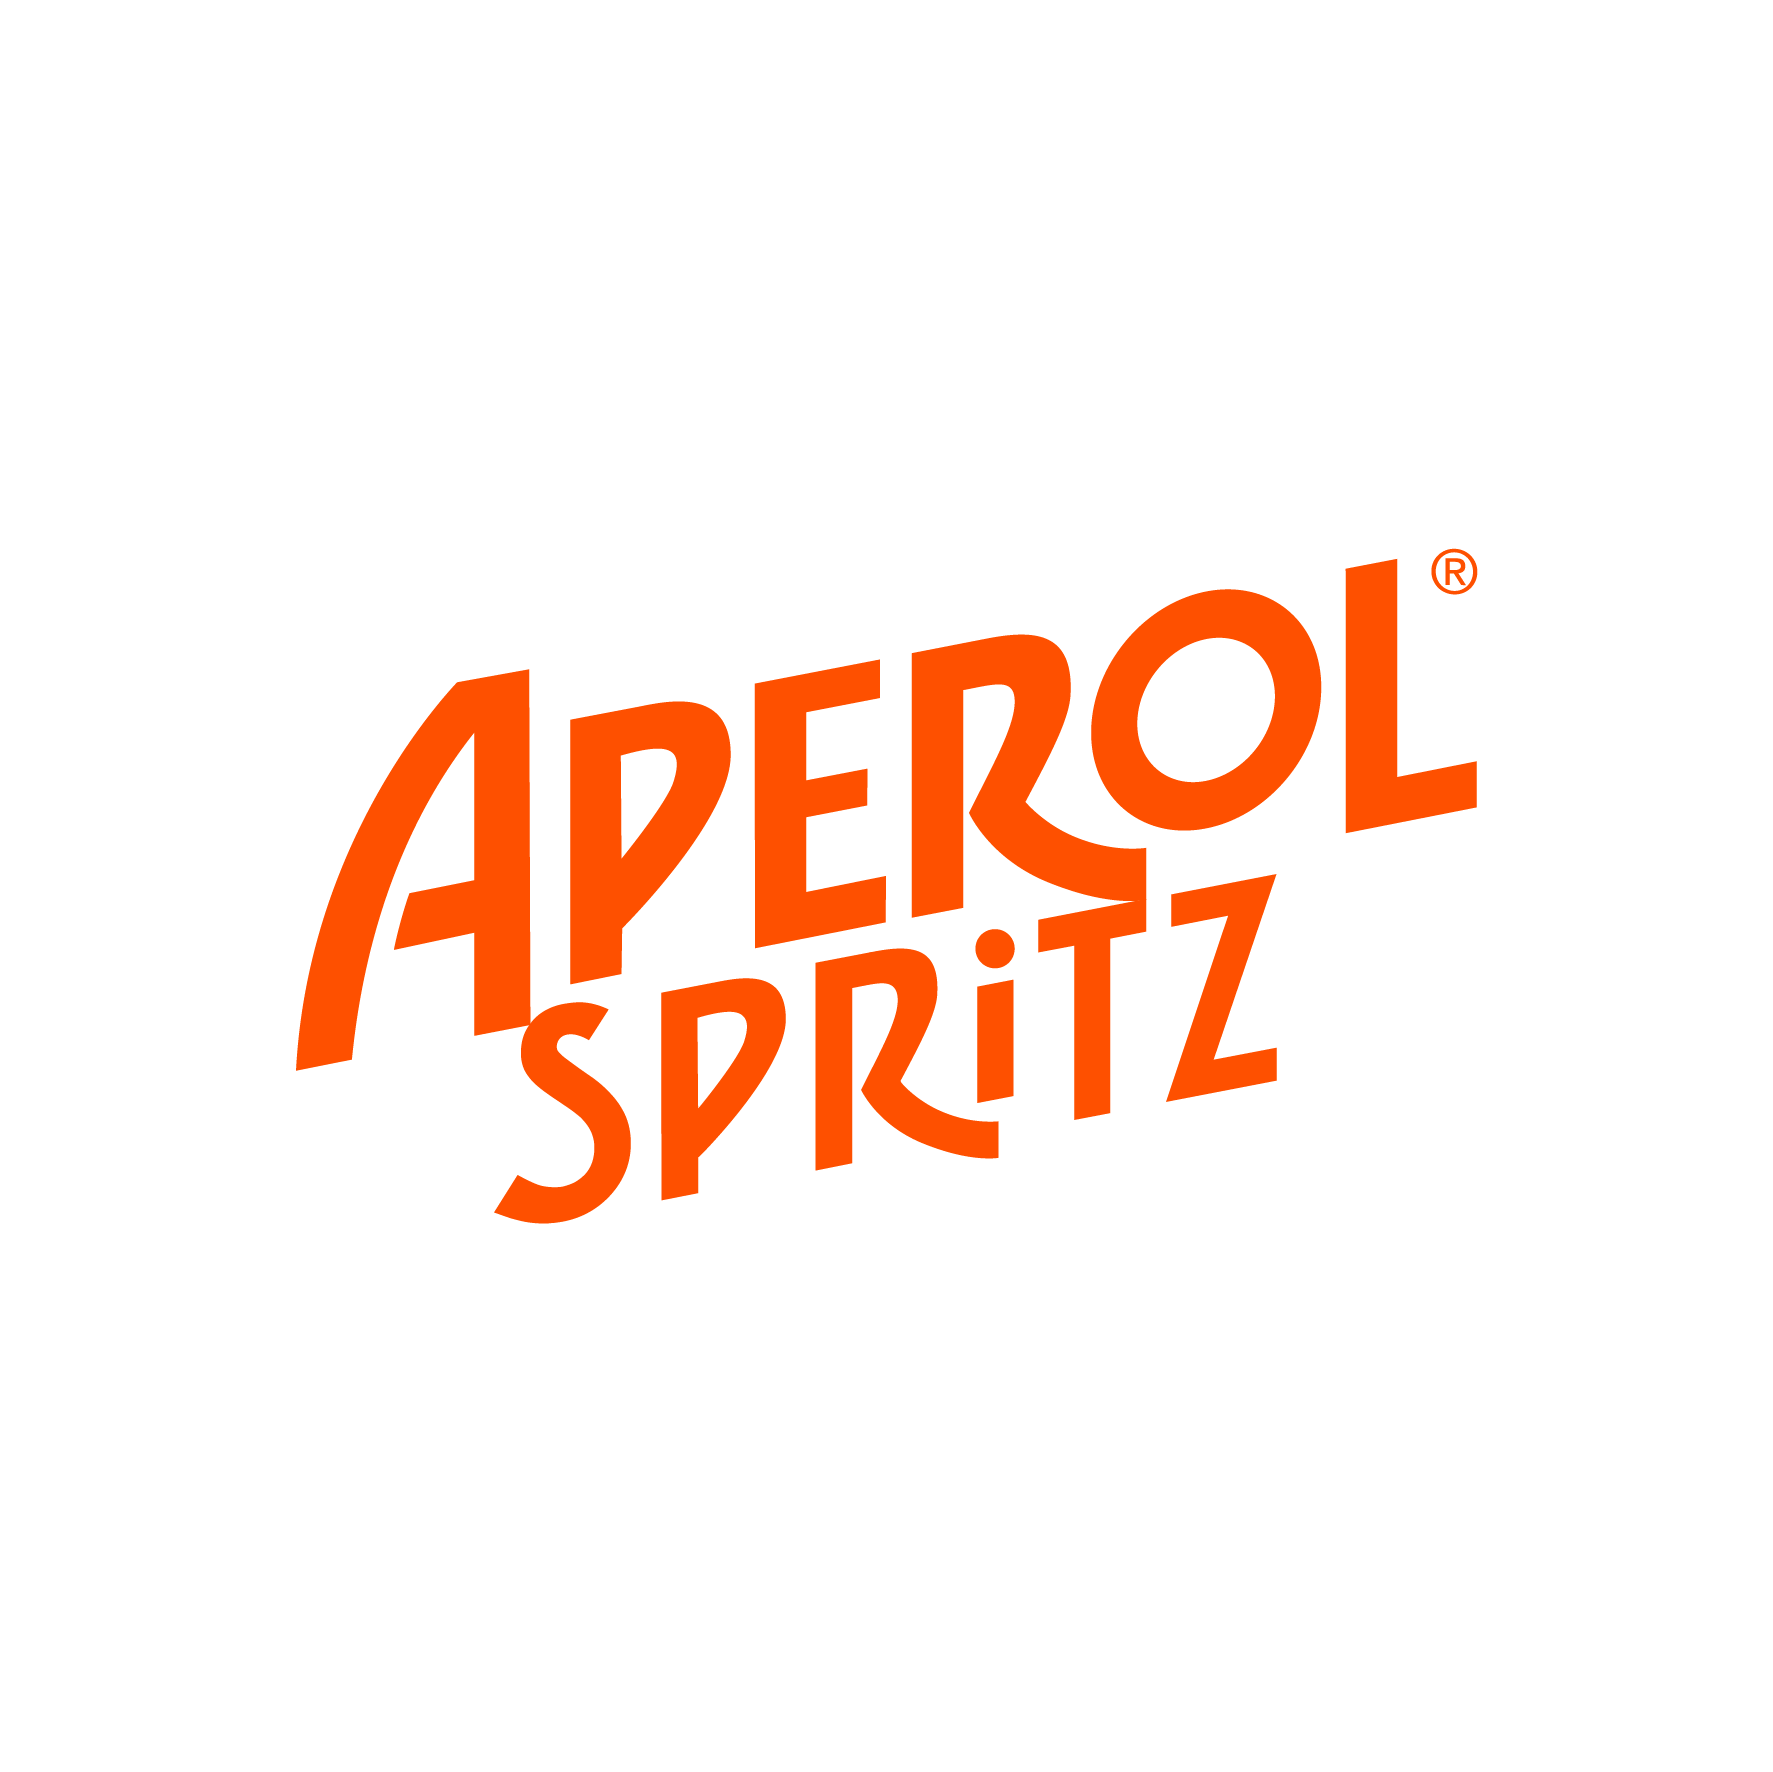 Aperol Spritz No Rays (Orange) - Logo.png